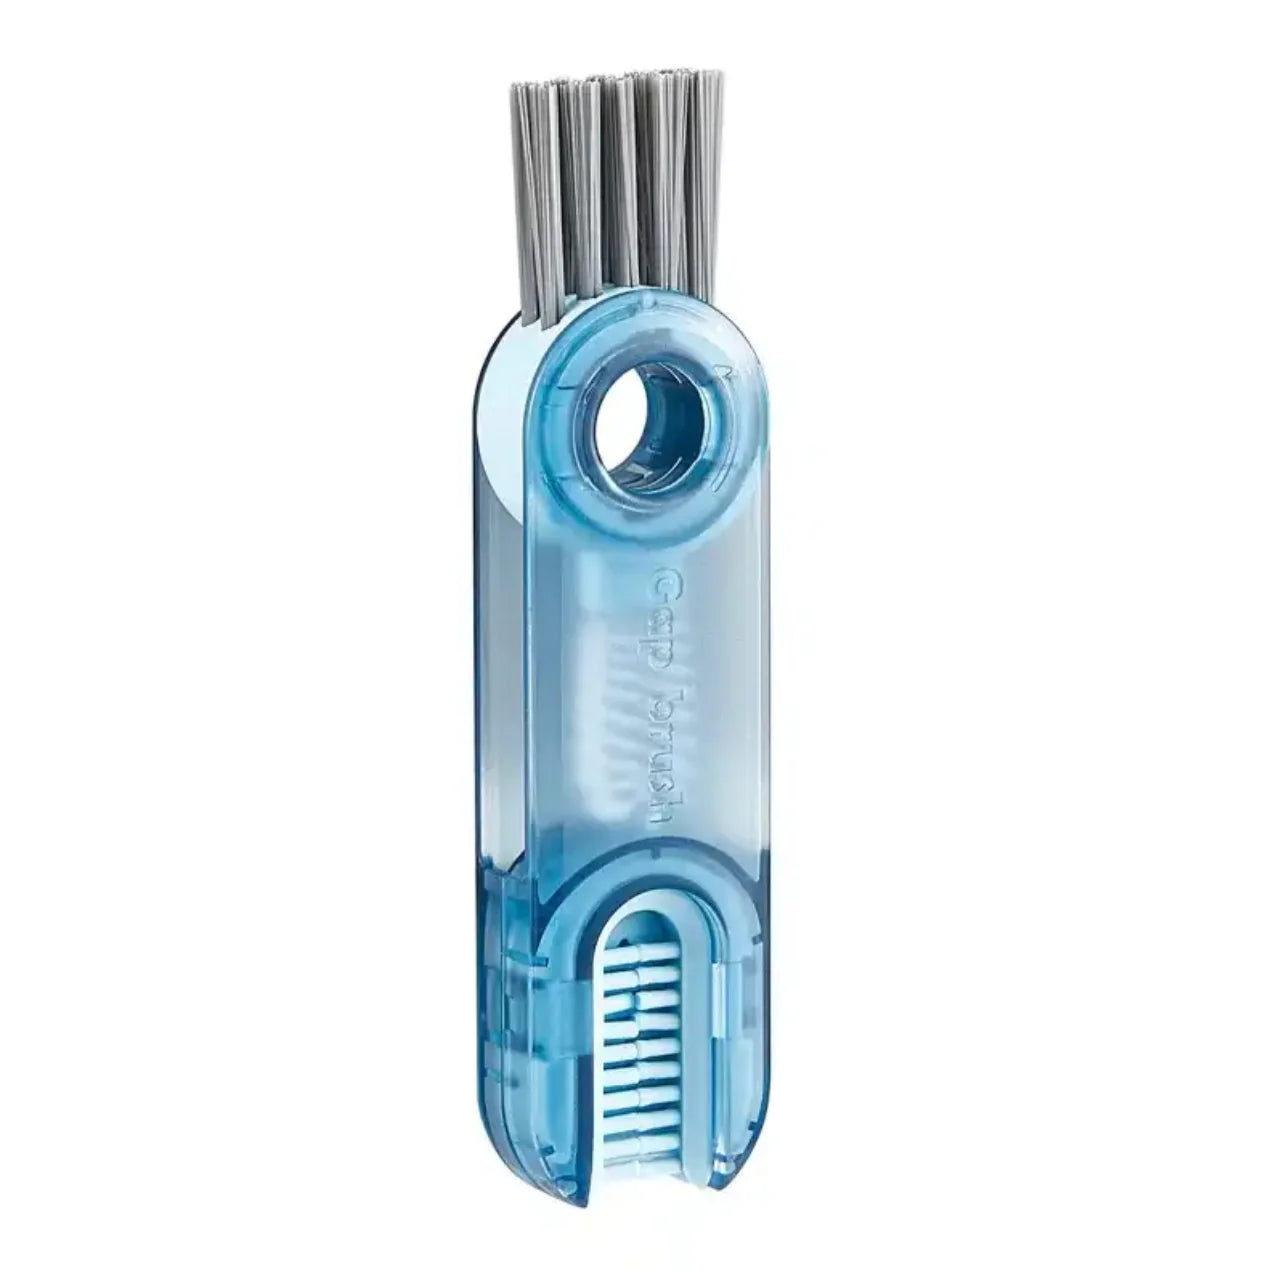 Homezore™ 3-in-1 Cleaning Brush